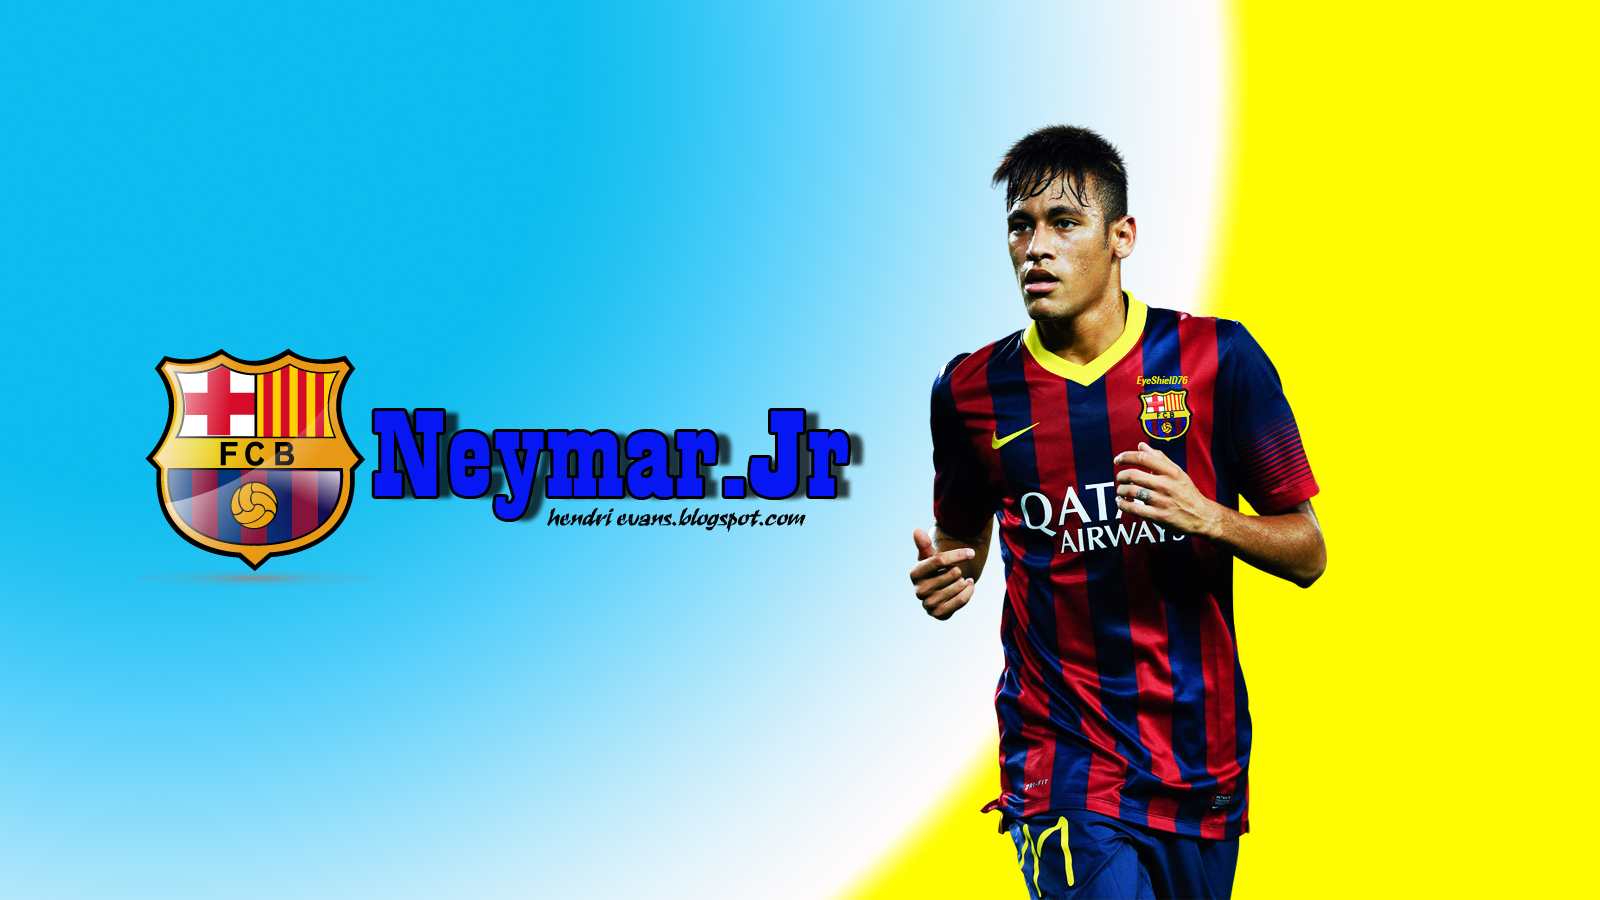 wallpaper neymar jr terbaru,football player,product,player,soccer player,team